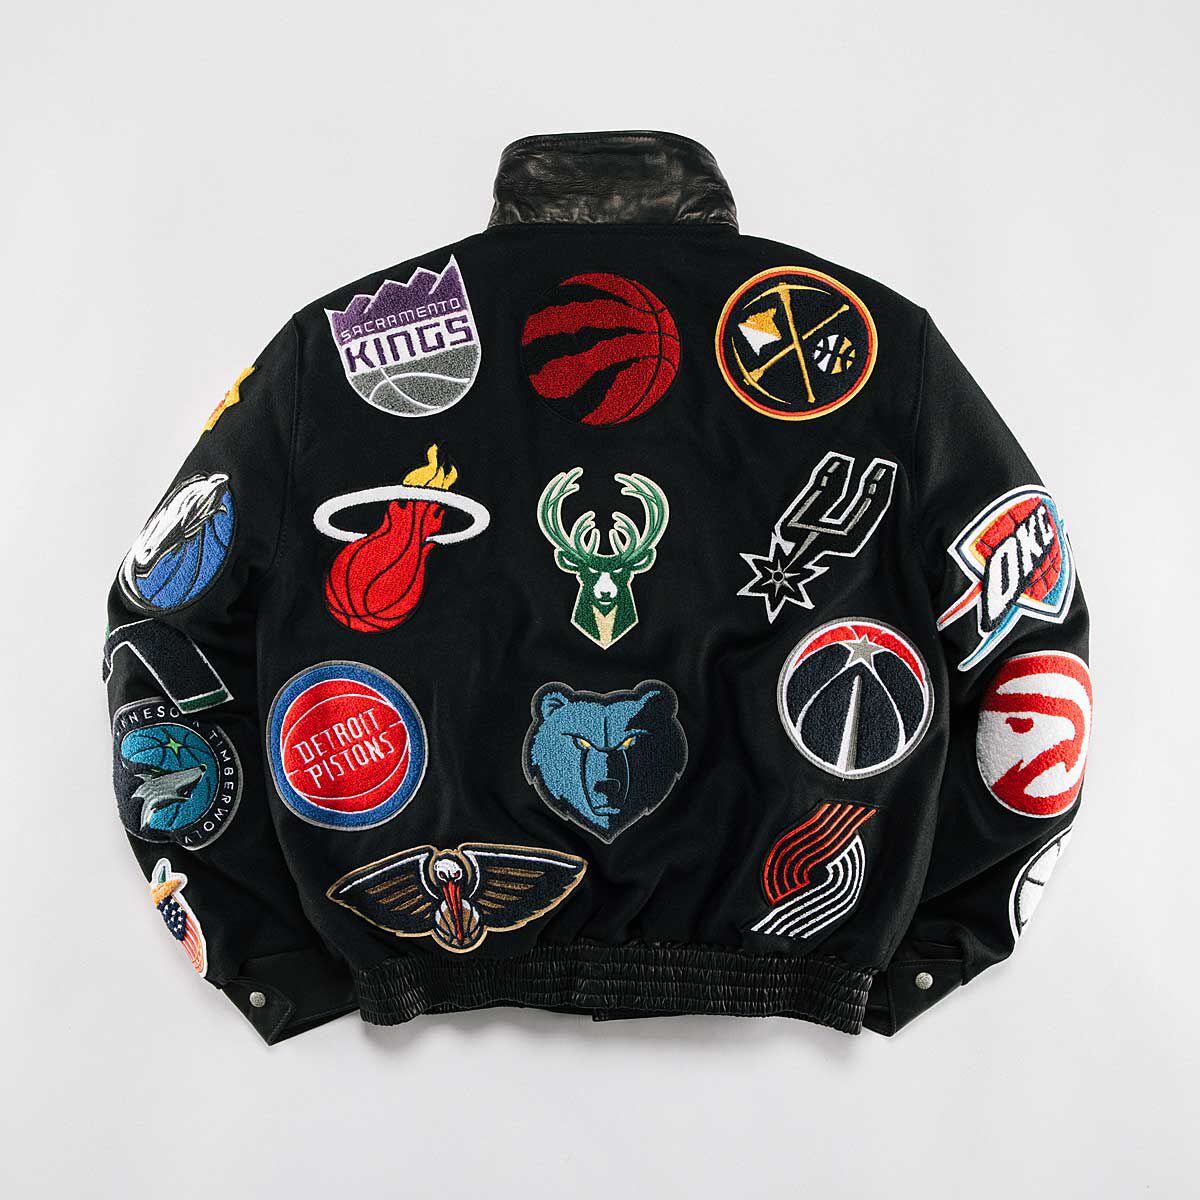 🏀 Get the Jeff Hamilton NBA Collage Wool and Leather Jacket! | KICKZ